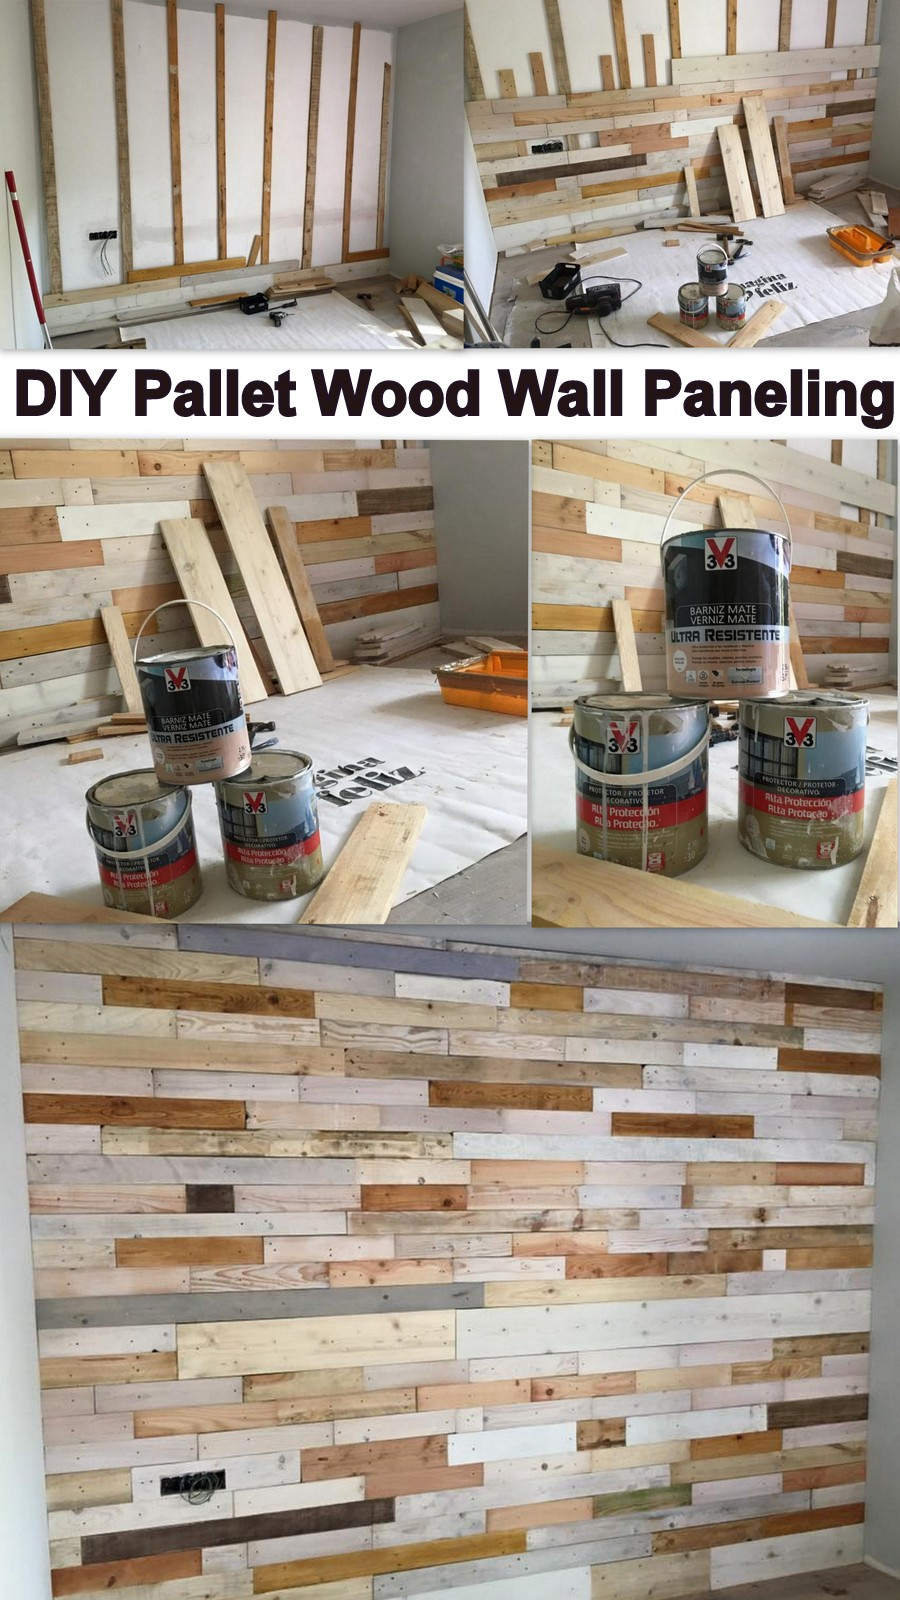 DIY Wood Panel Wall
 DIY Pallet Wood Wall Paneling